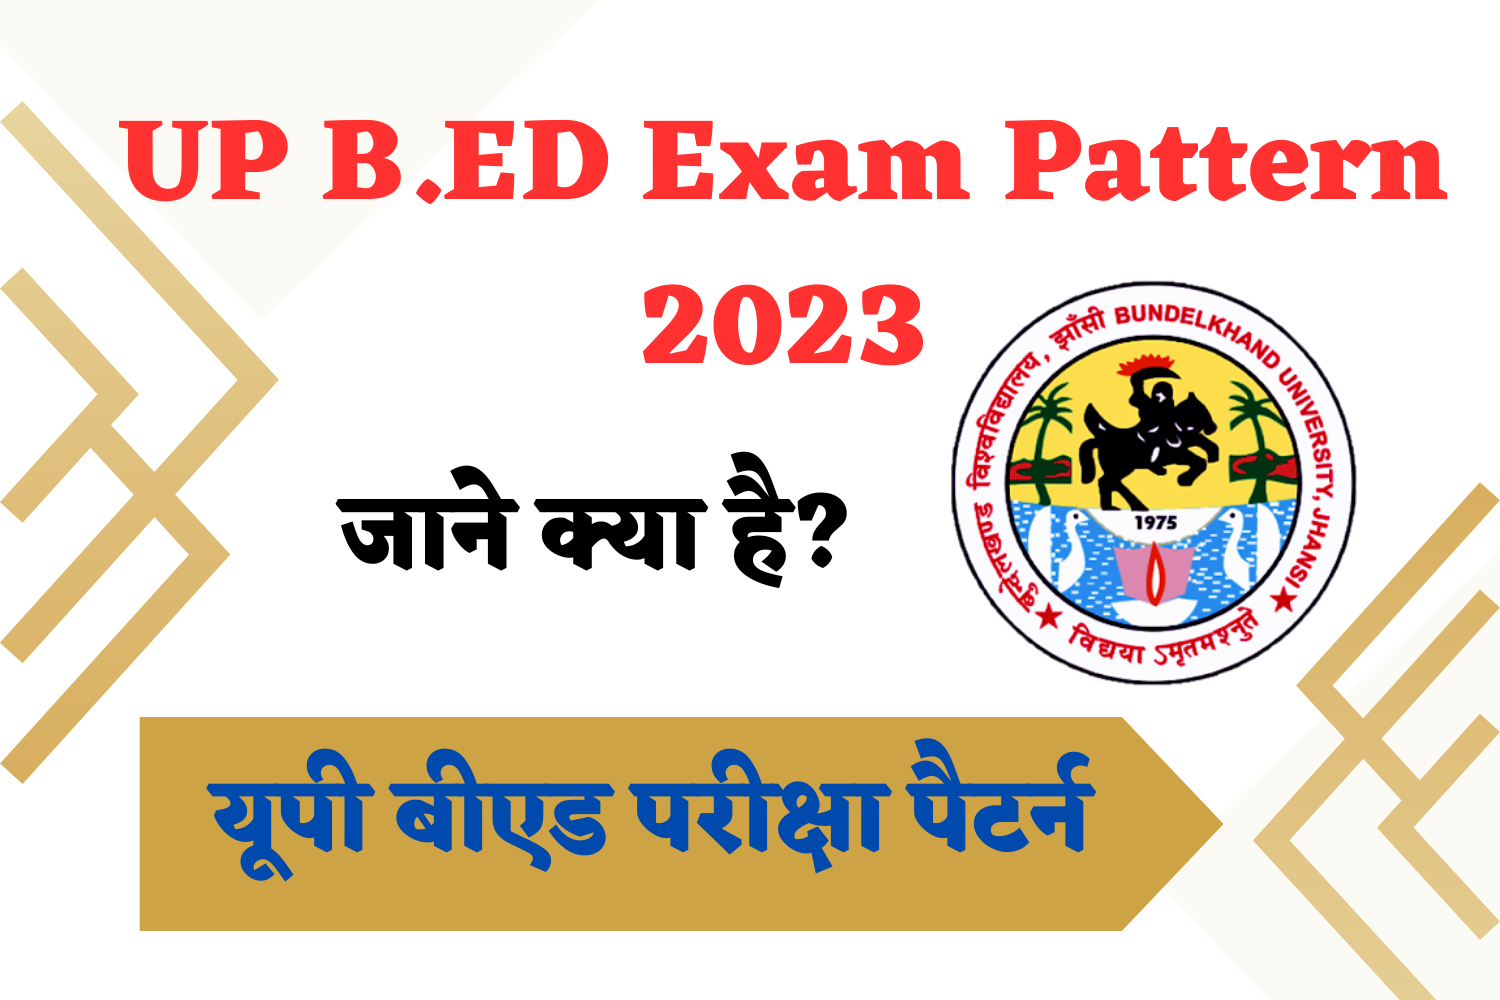 UP B.ED Exam Pattern 2023: यूपी बीएड परीक्षा पैटर्न